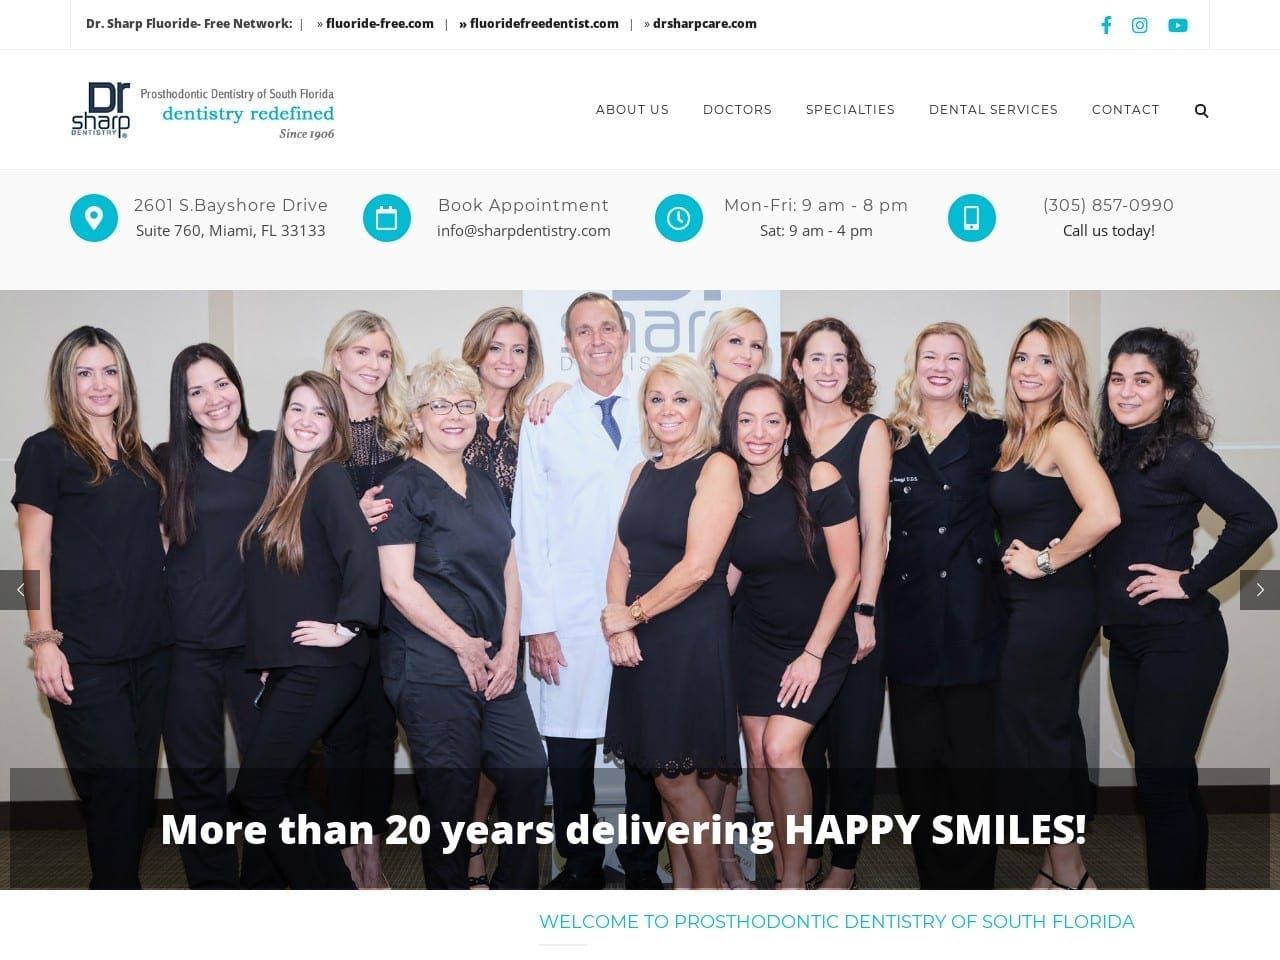 Prosthodontic Dentistry Website Screenshot from sharpdentistry.com